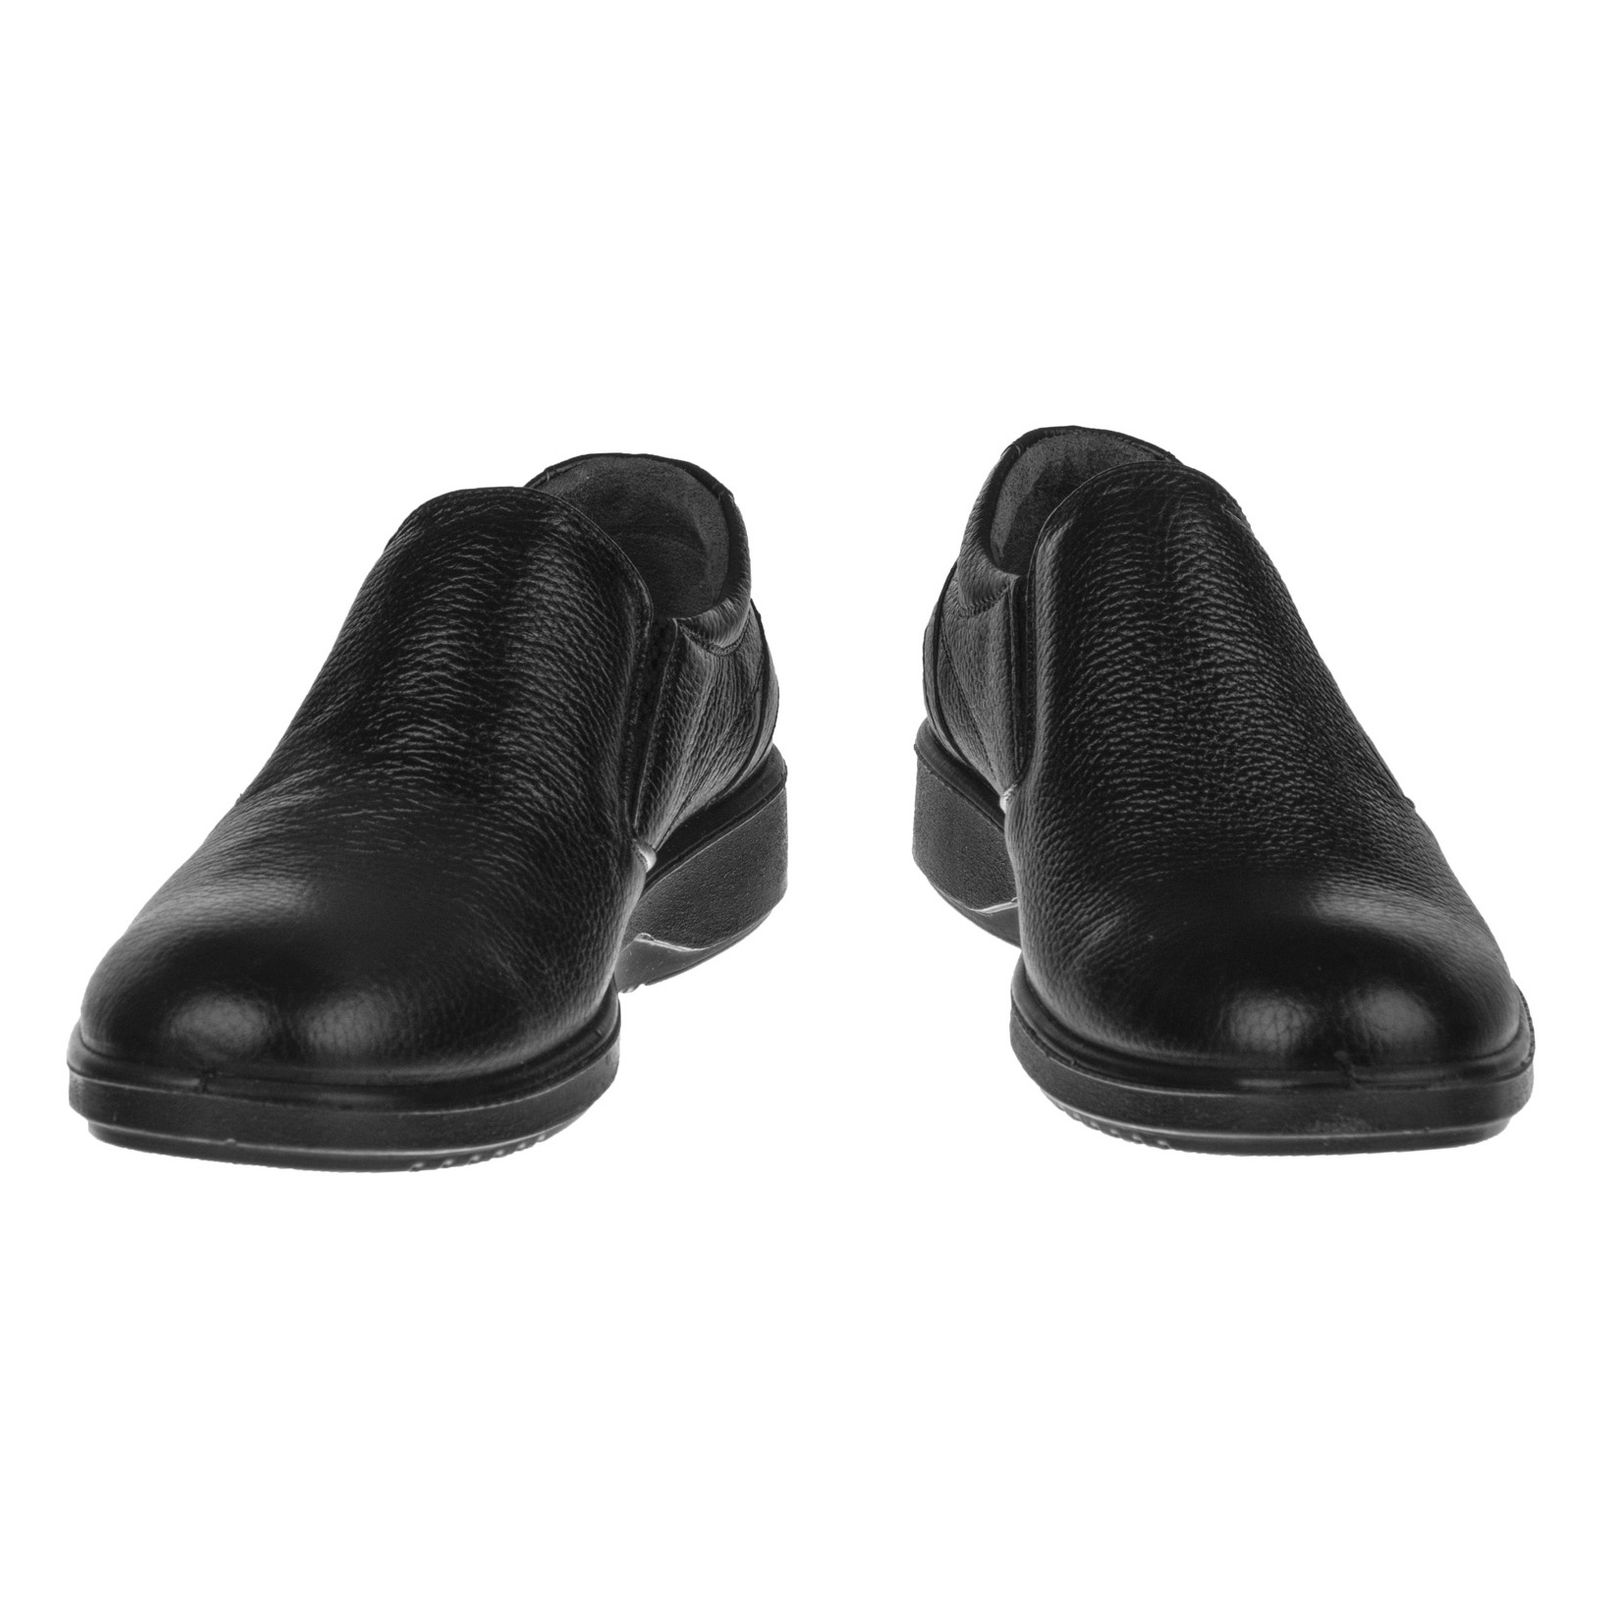 کفش روزمره مردانه بلوط مدل 7216A503-101 - مشکی - 4